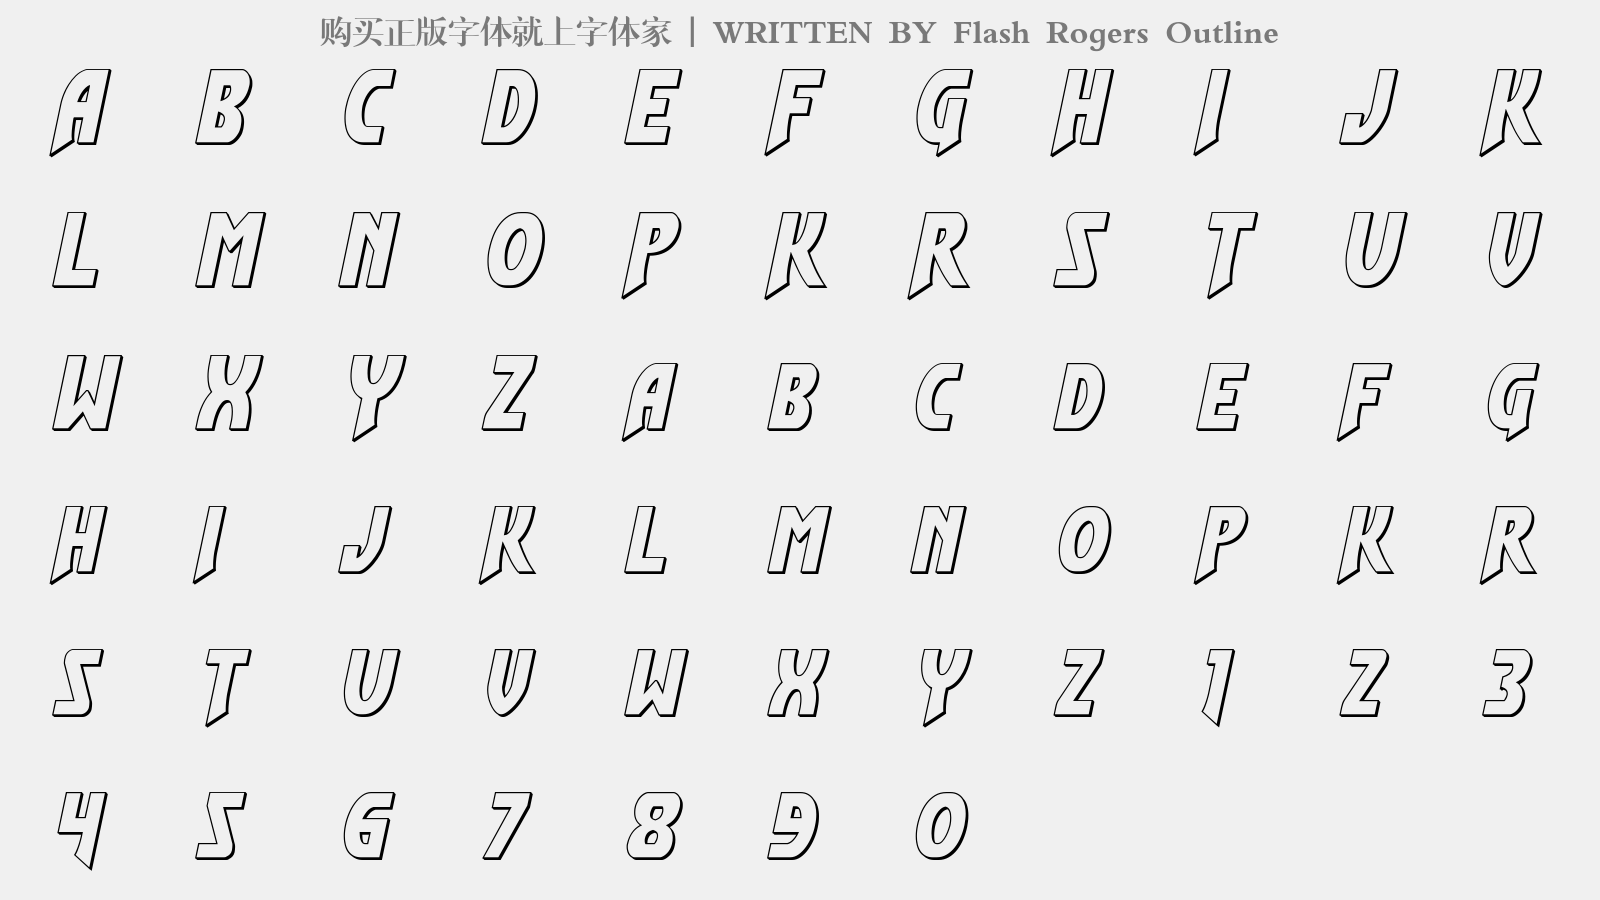 Flash Rogers Outline - 大写字母/小写字母/数字